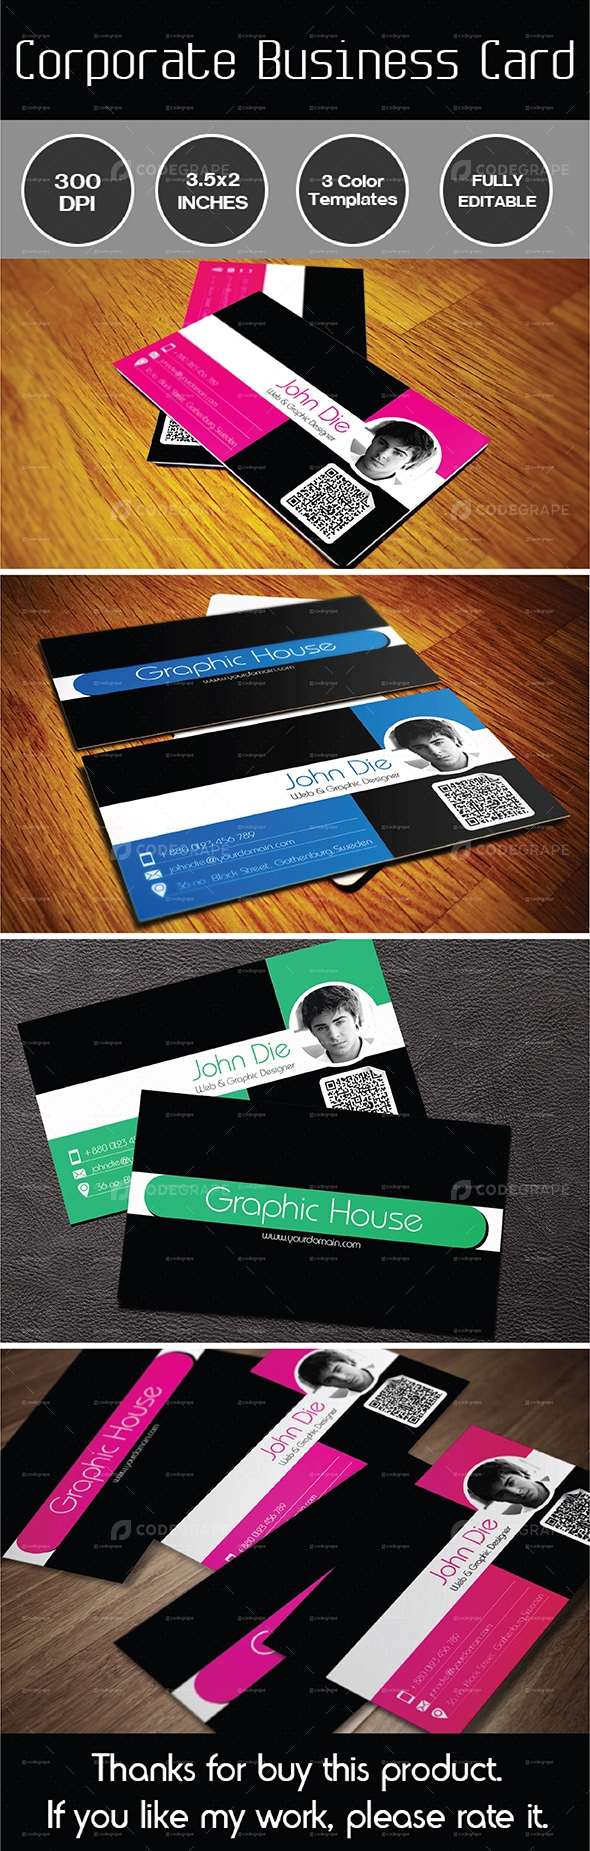 Corporate Business Card - Prints | CodeGrape